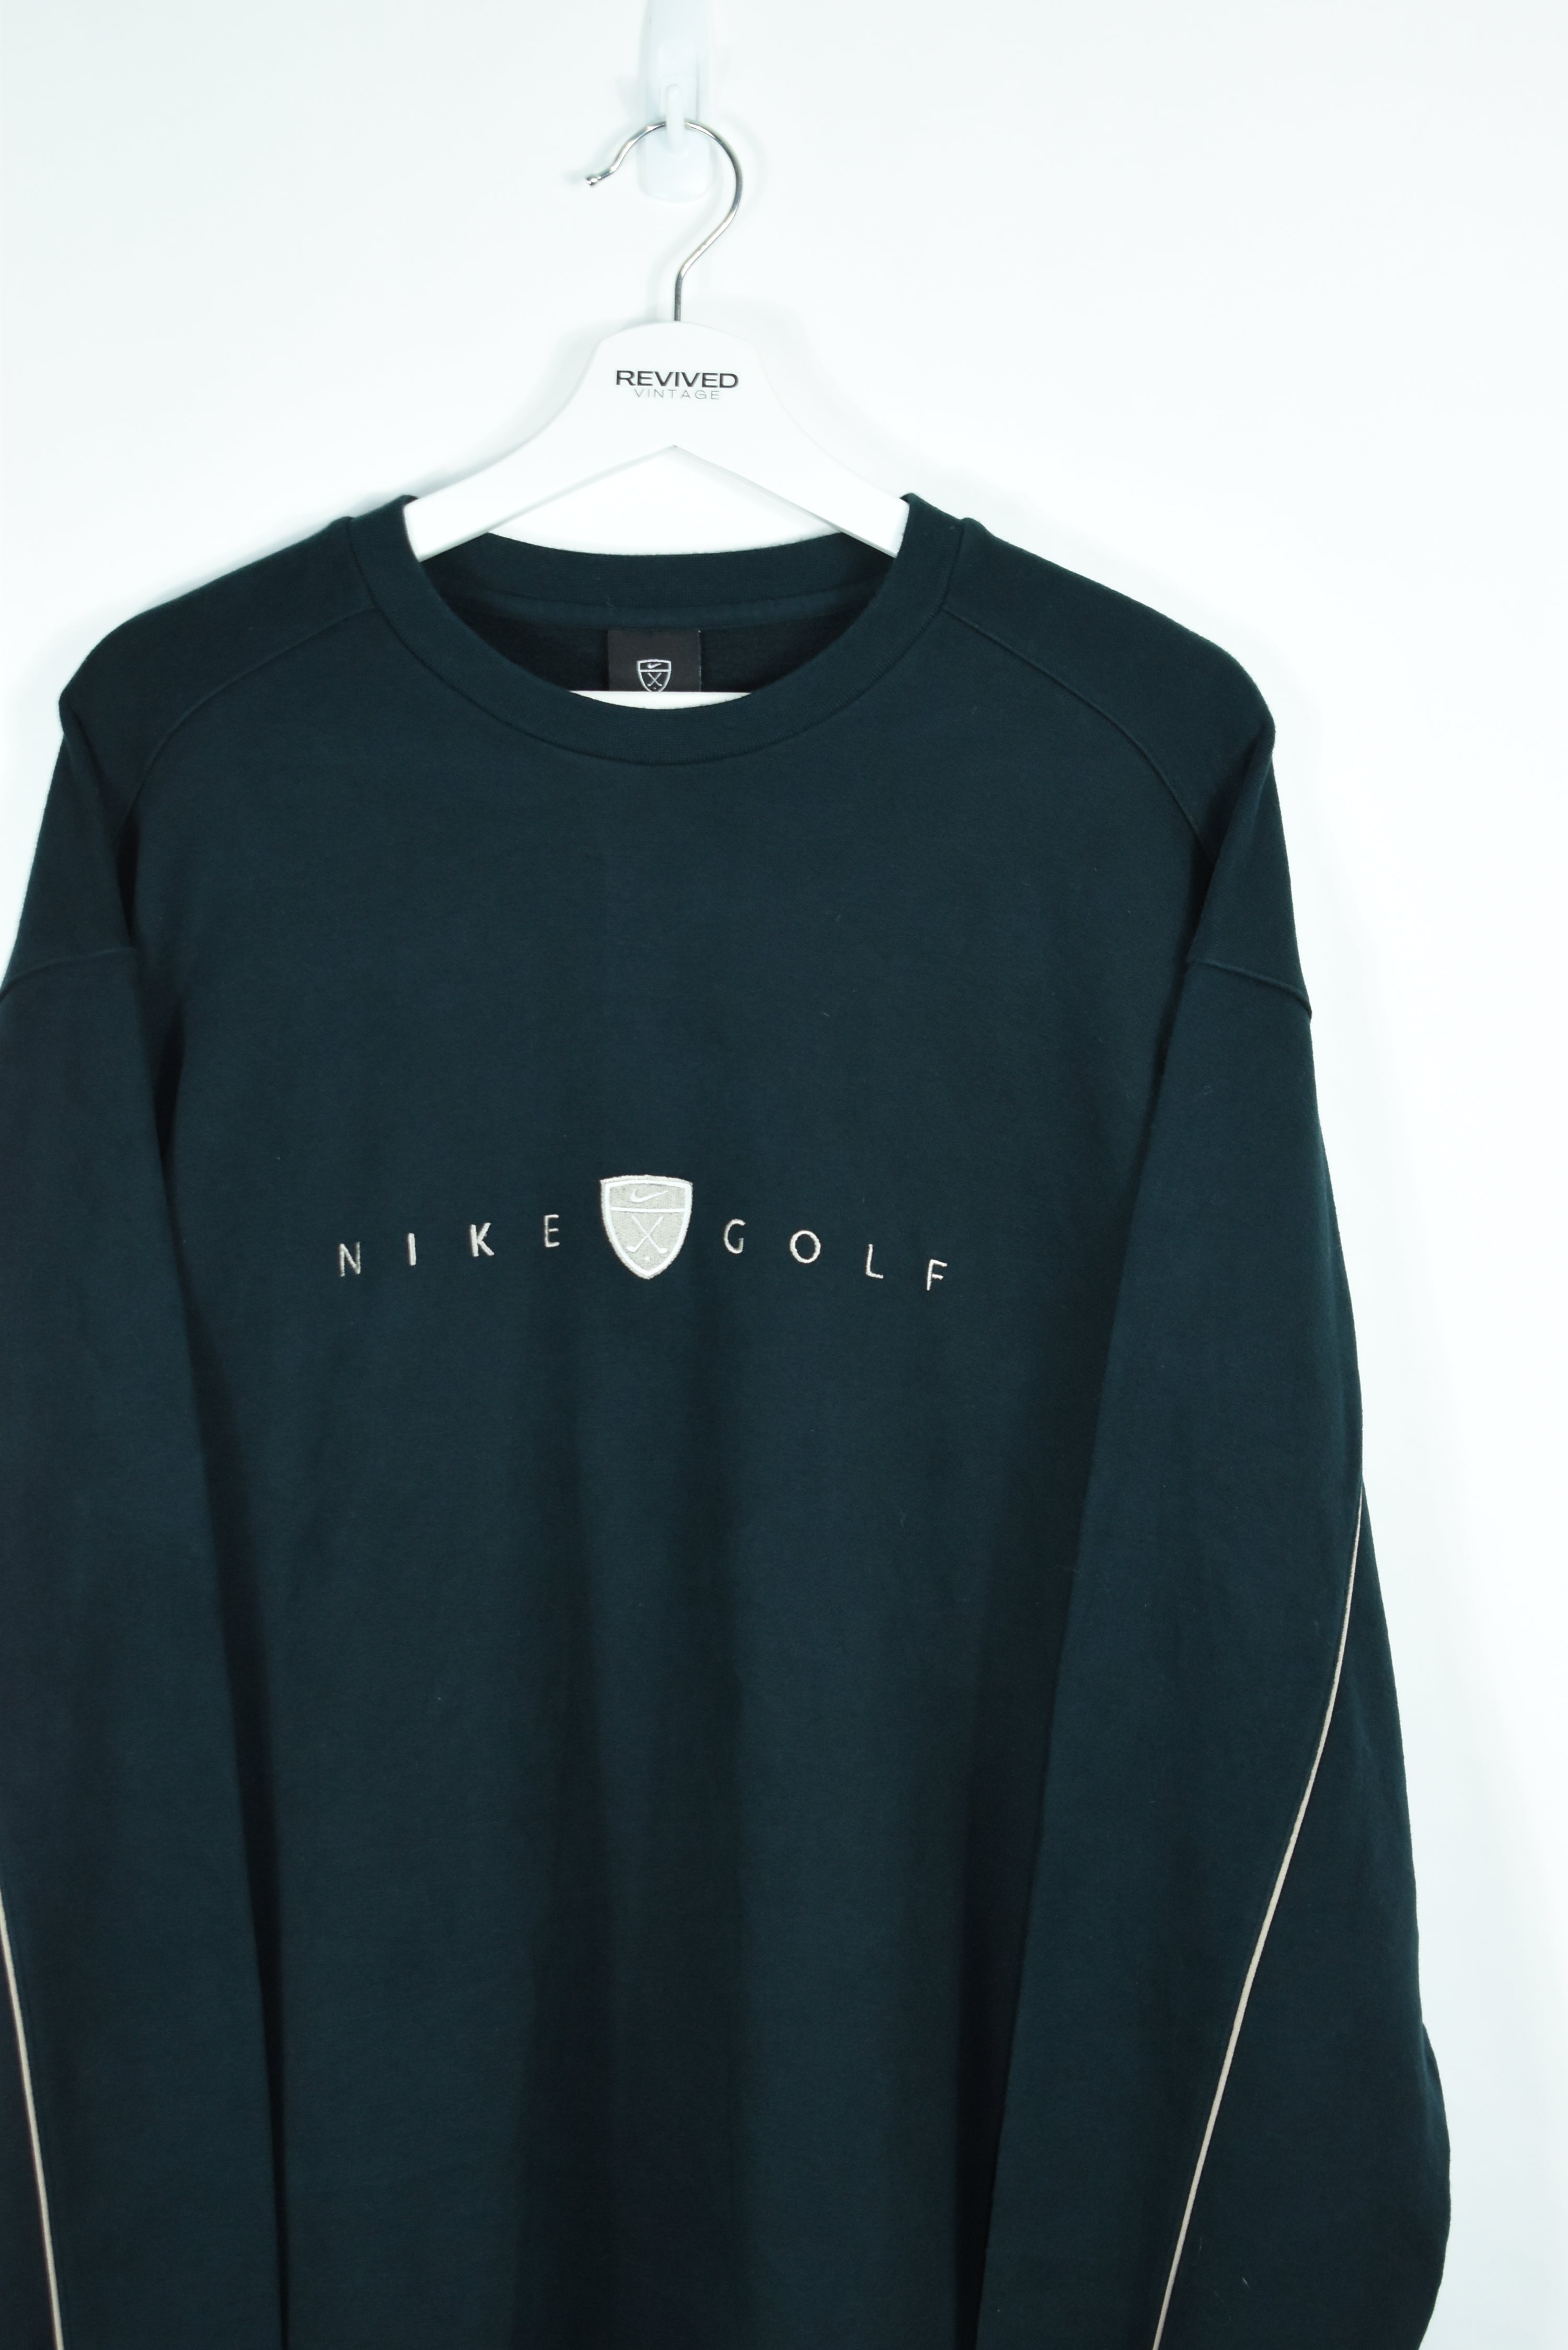 Vintage Nike Golf Embroidery Sweatshirt XLARGE